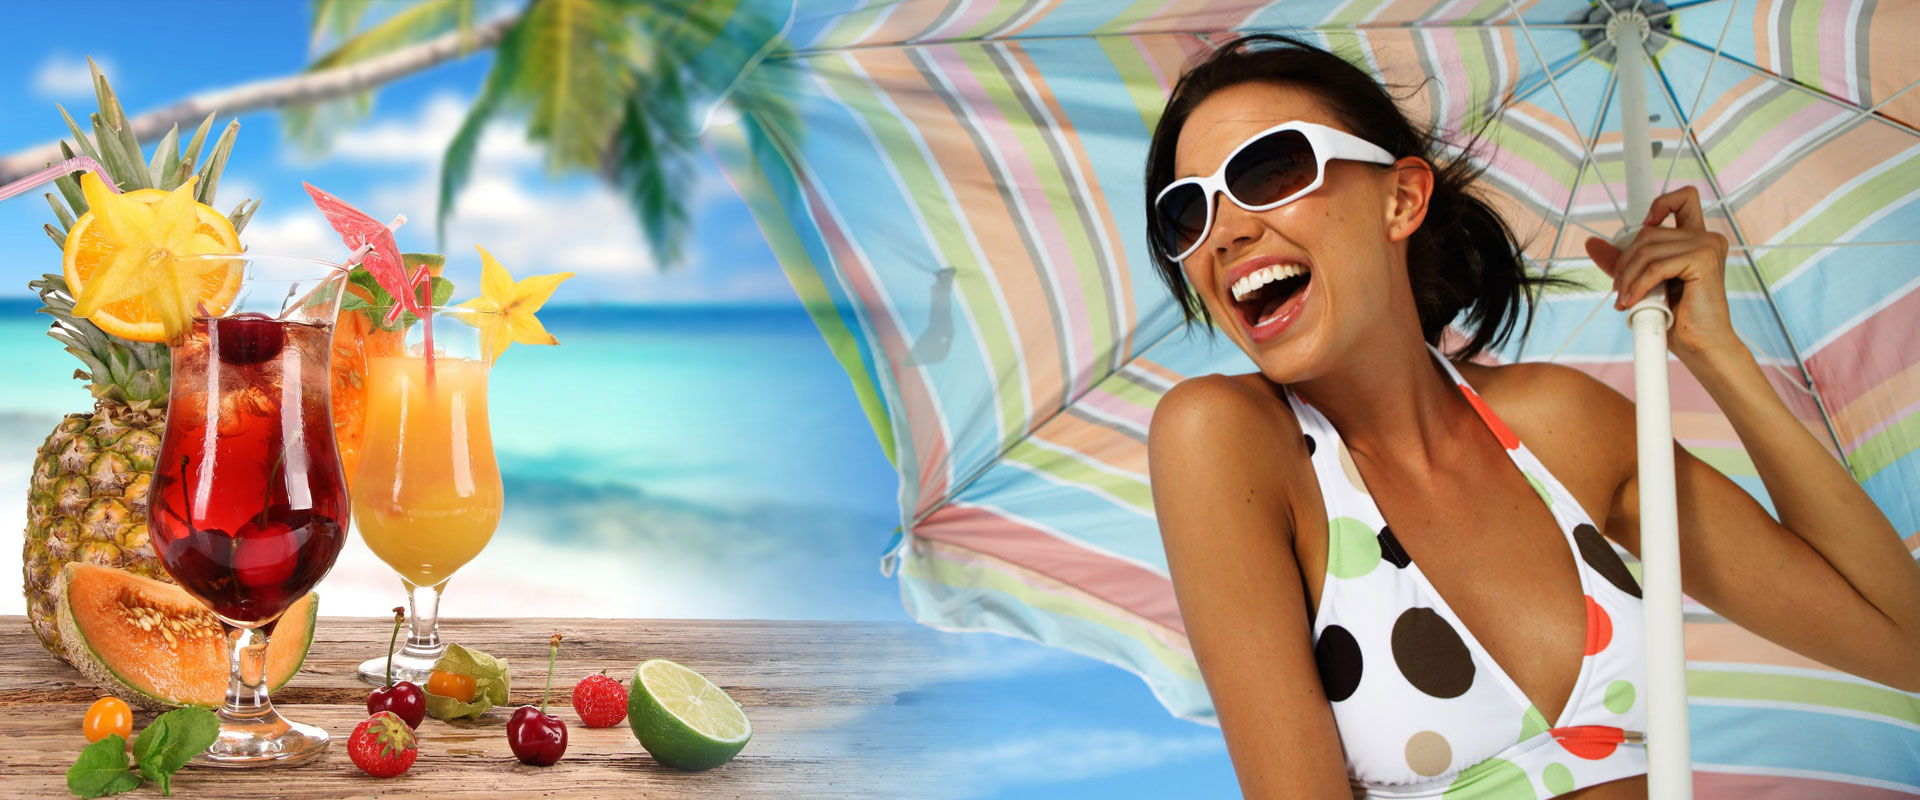 Offerte vacanze Mamatours prodotti  vacanze offerte vacanze vacanze viaggi 